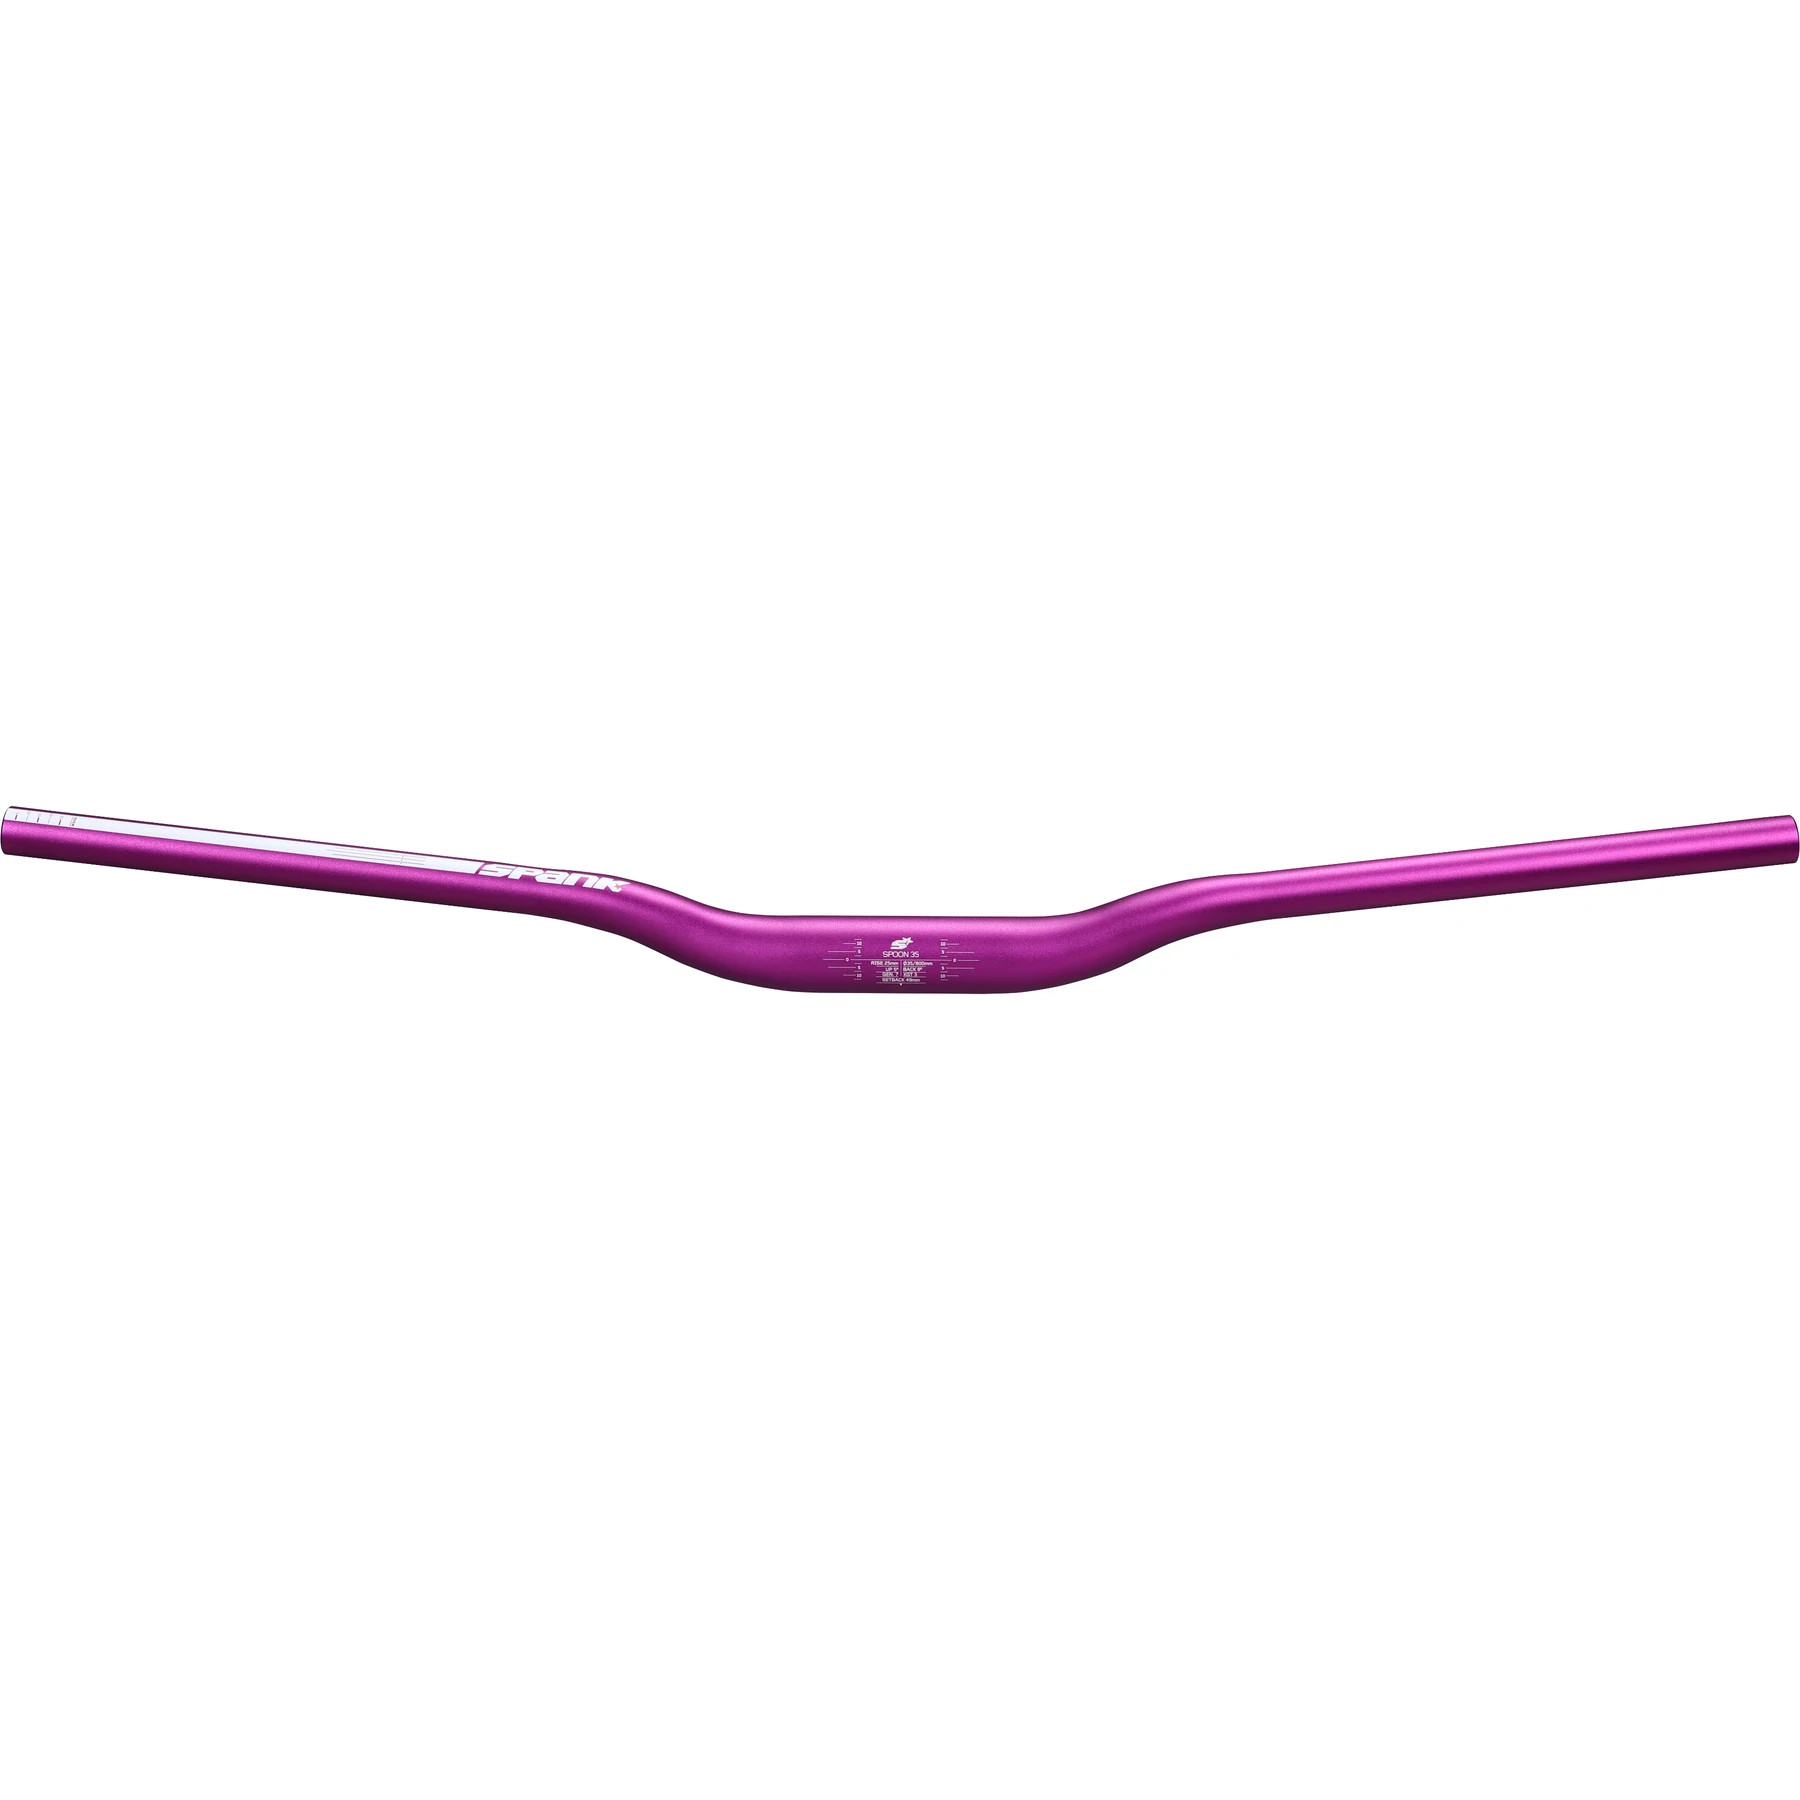 Productfoto van Spank Spoon 35 MTB Handlebar - 800mm - purple